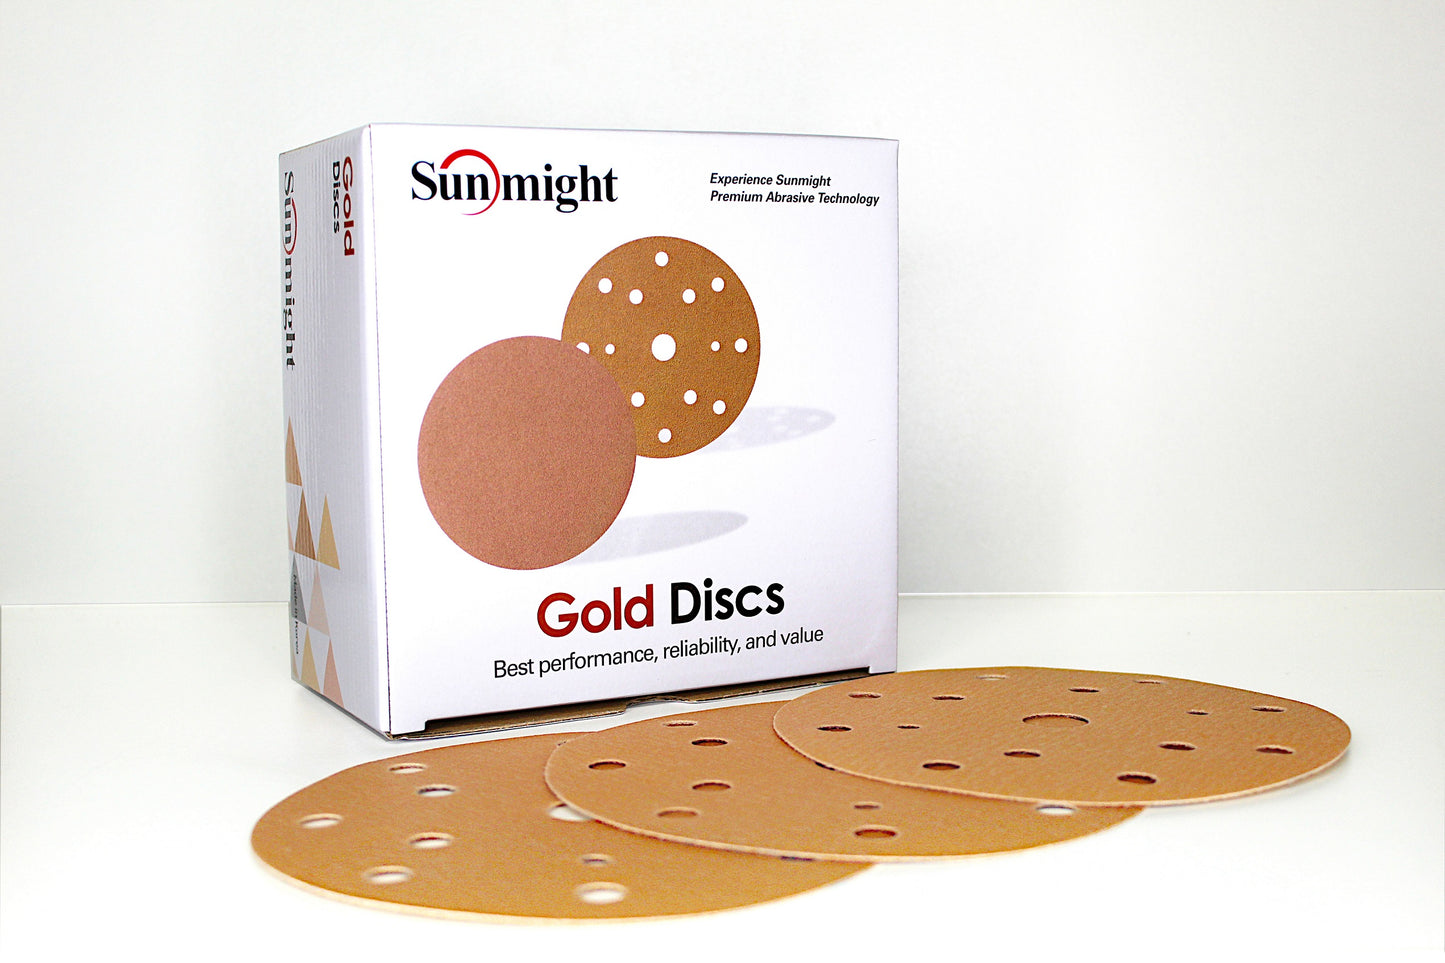 Sunmight Gold DA Sanding Discs 15 Holes 150mm (100 pack)